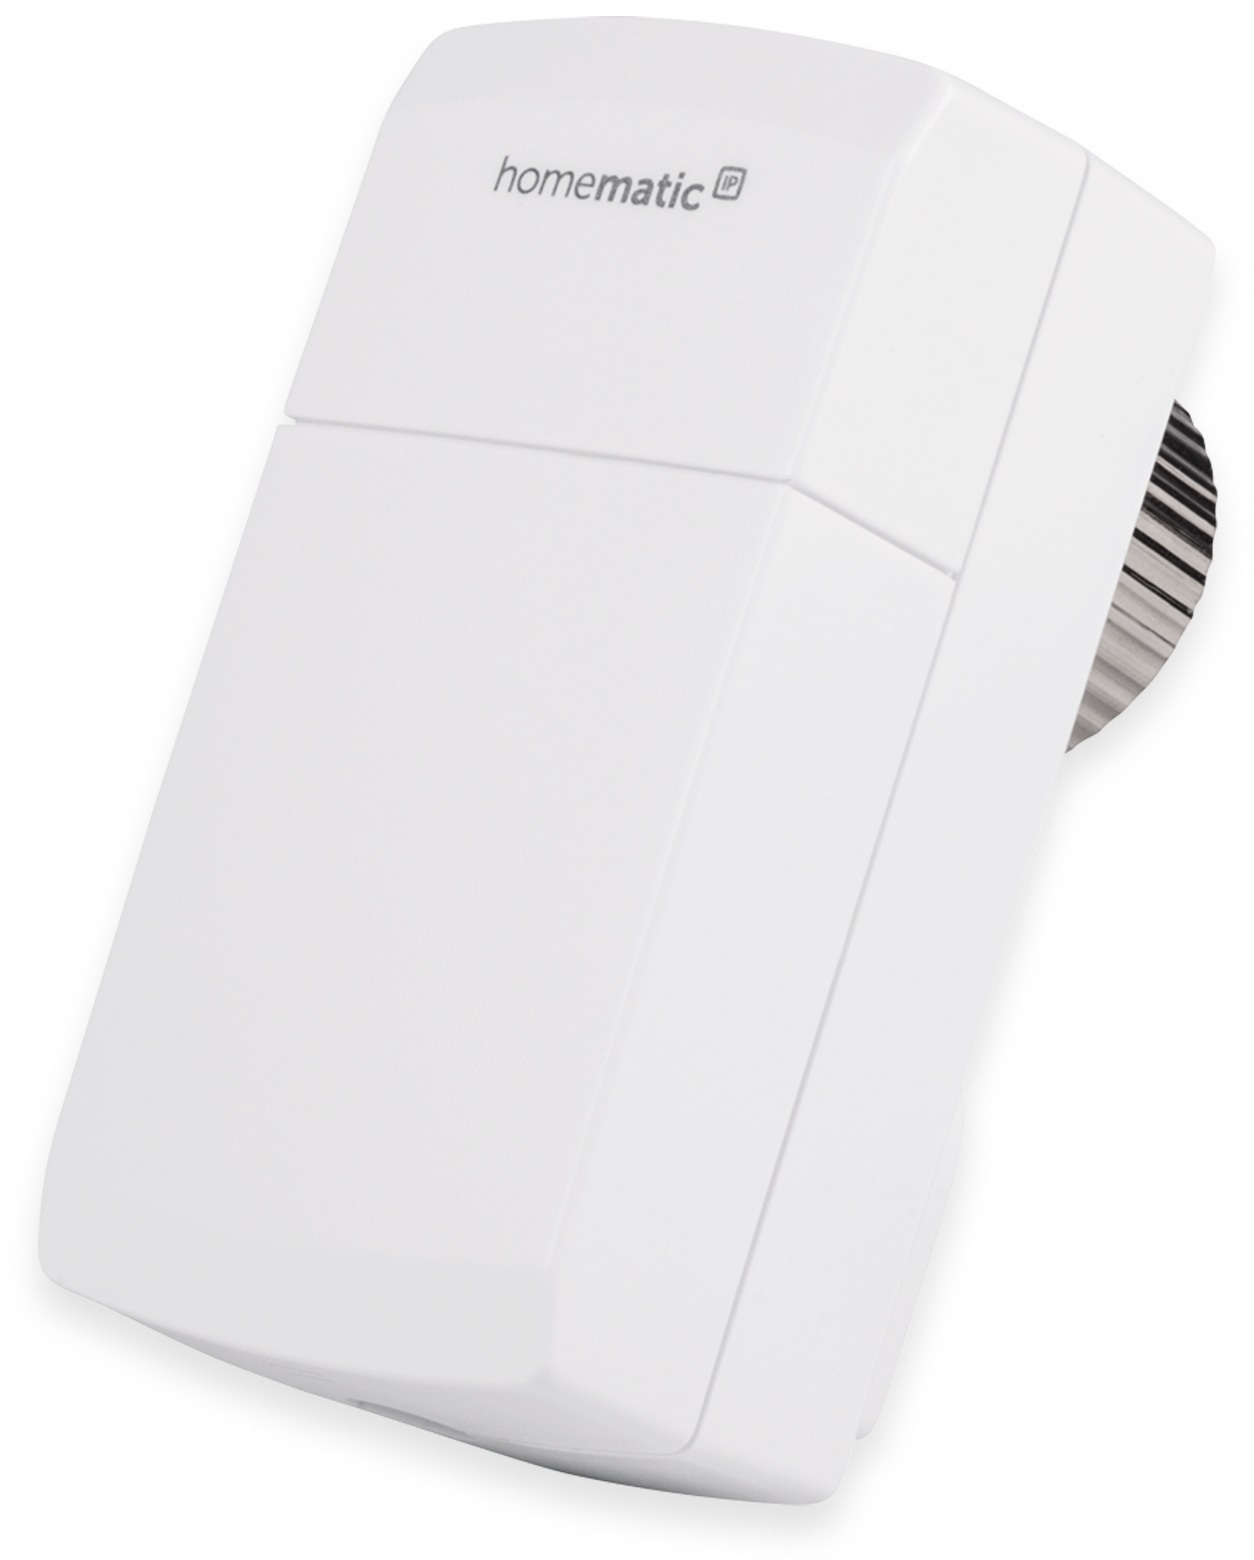 HOMEMATIC IP Smart Home 155648A0, Heizkörper-Thermostatkopf kompakt